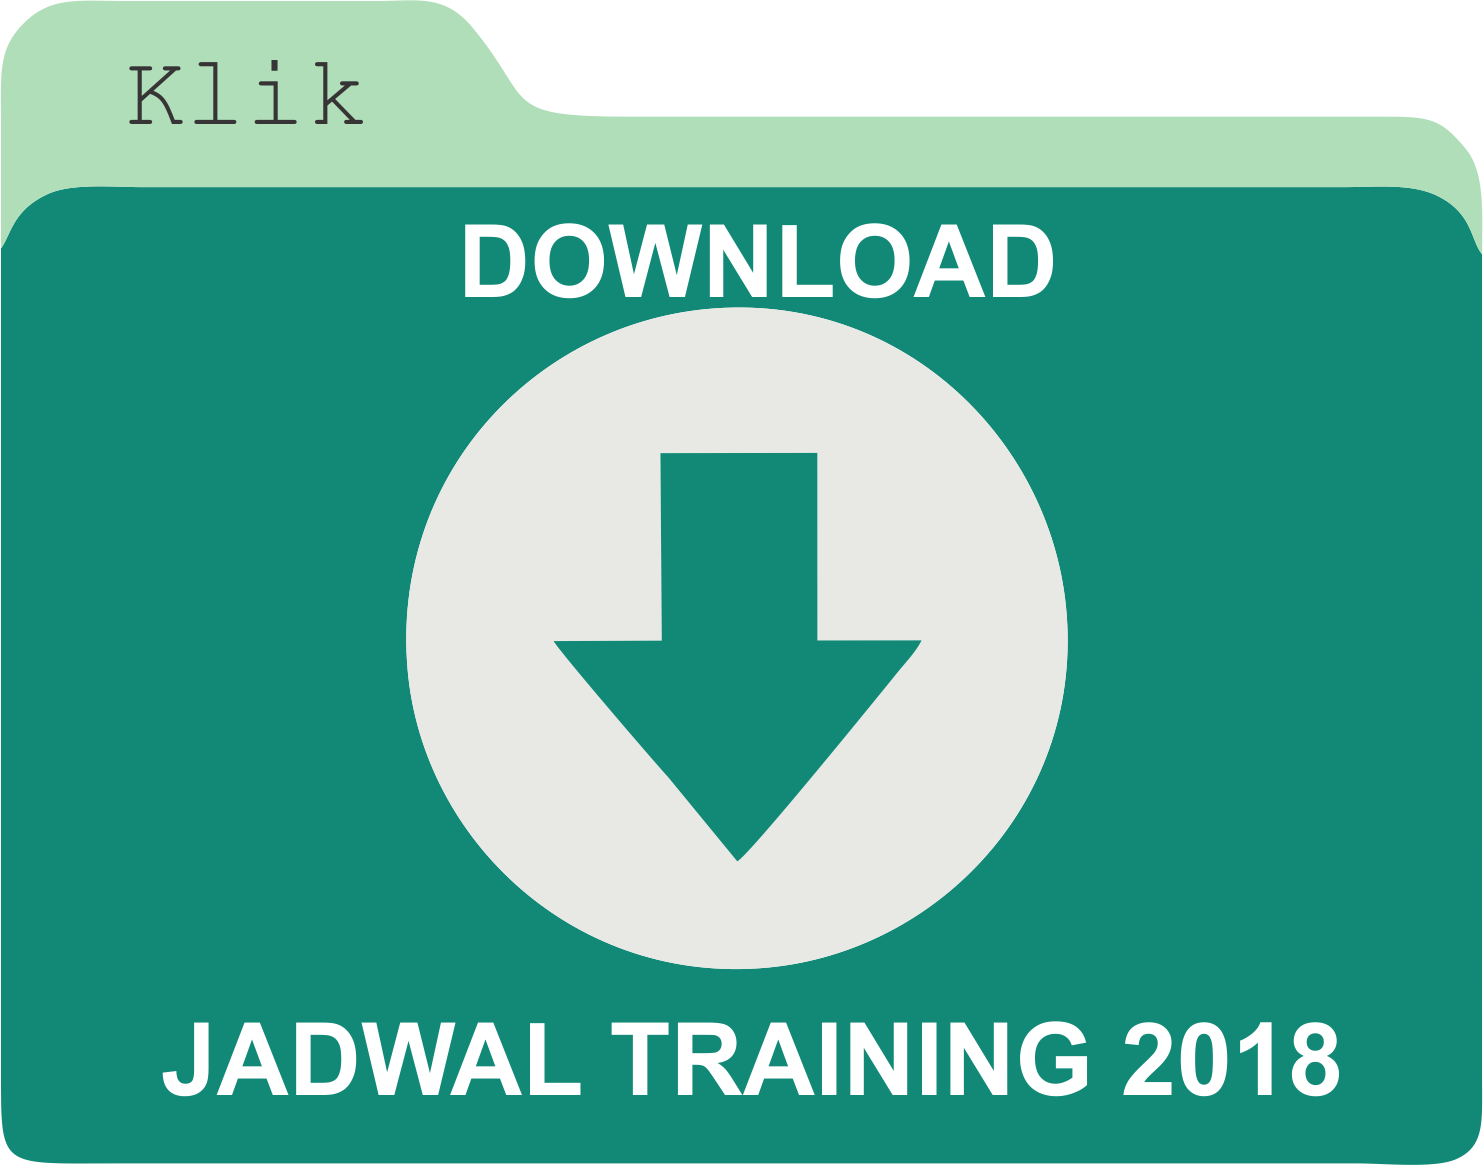 Download Jadwal 2018